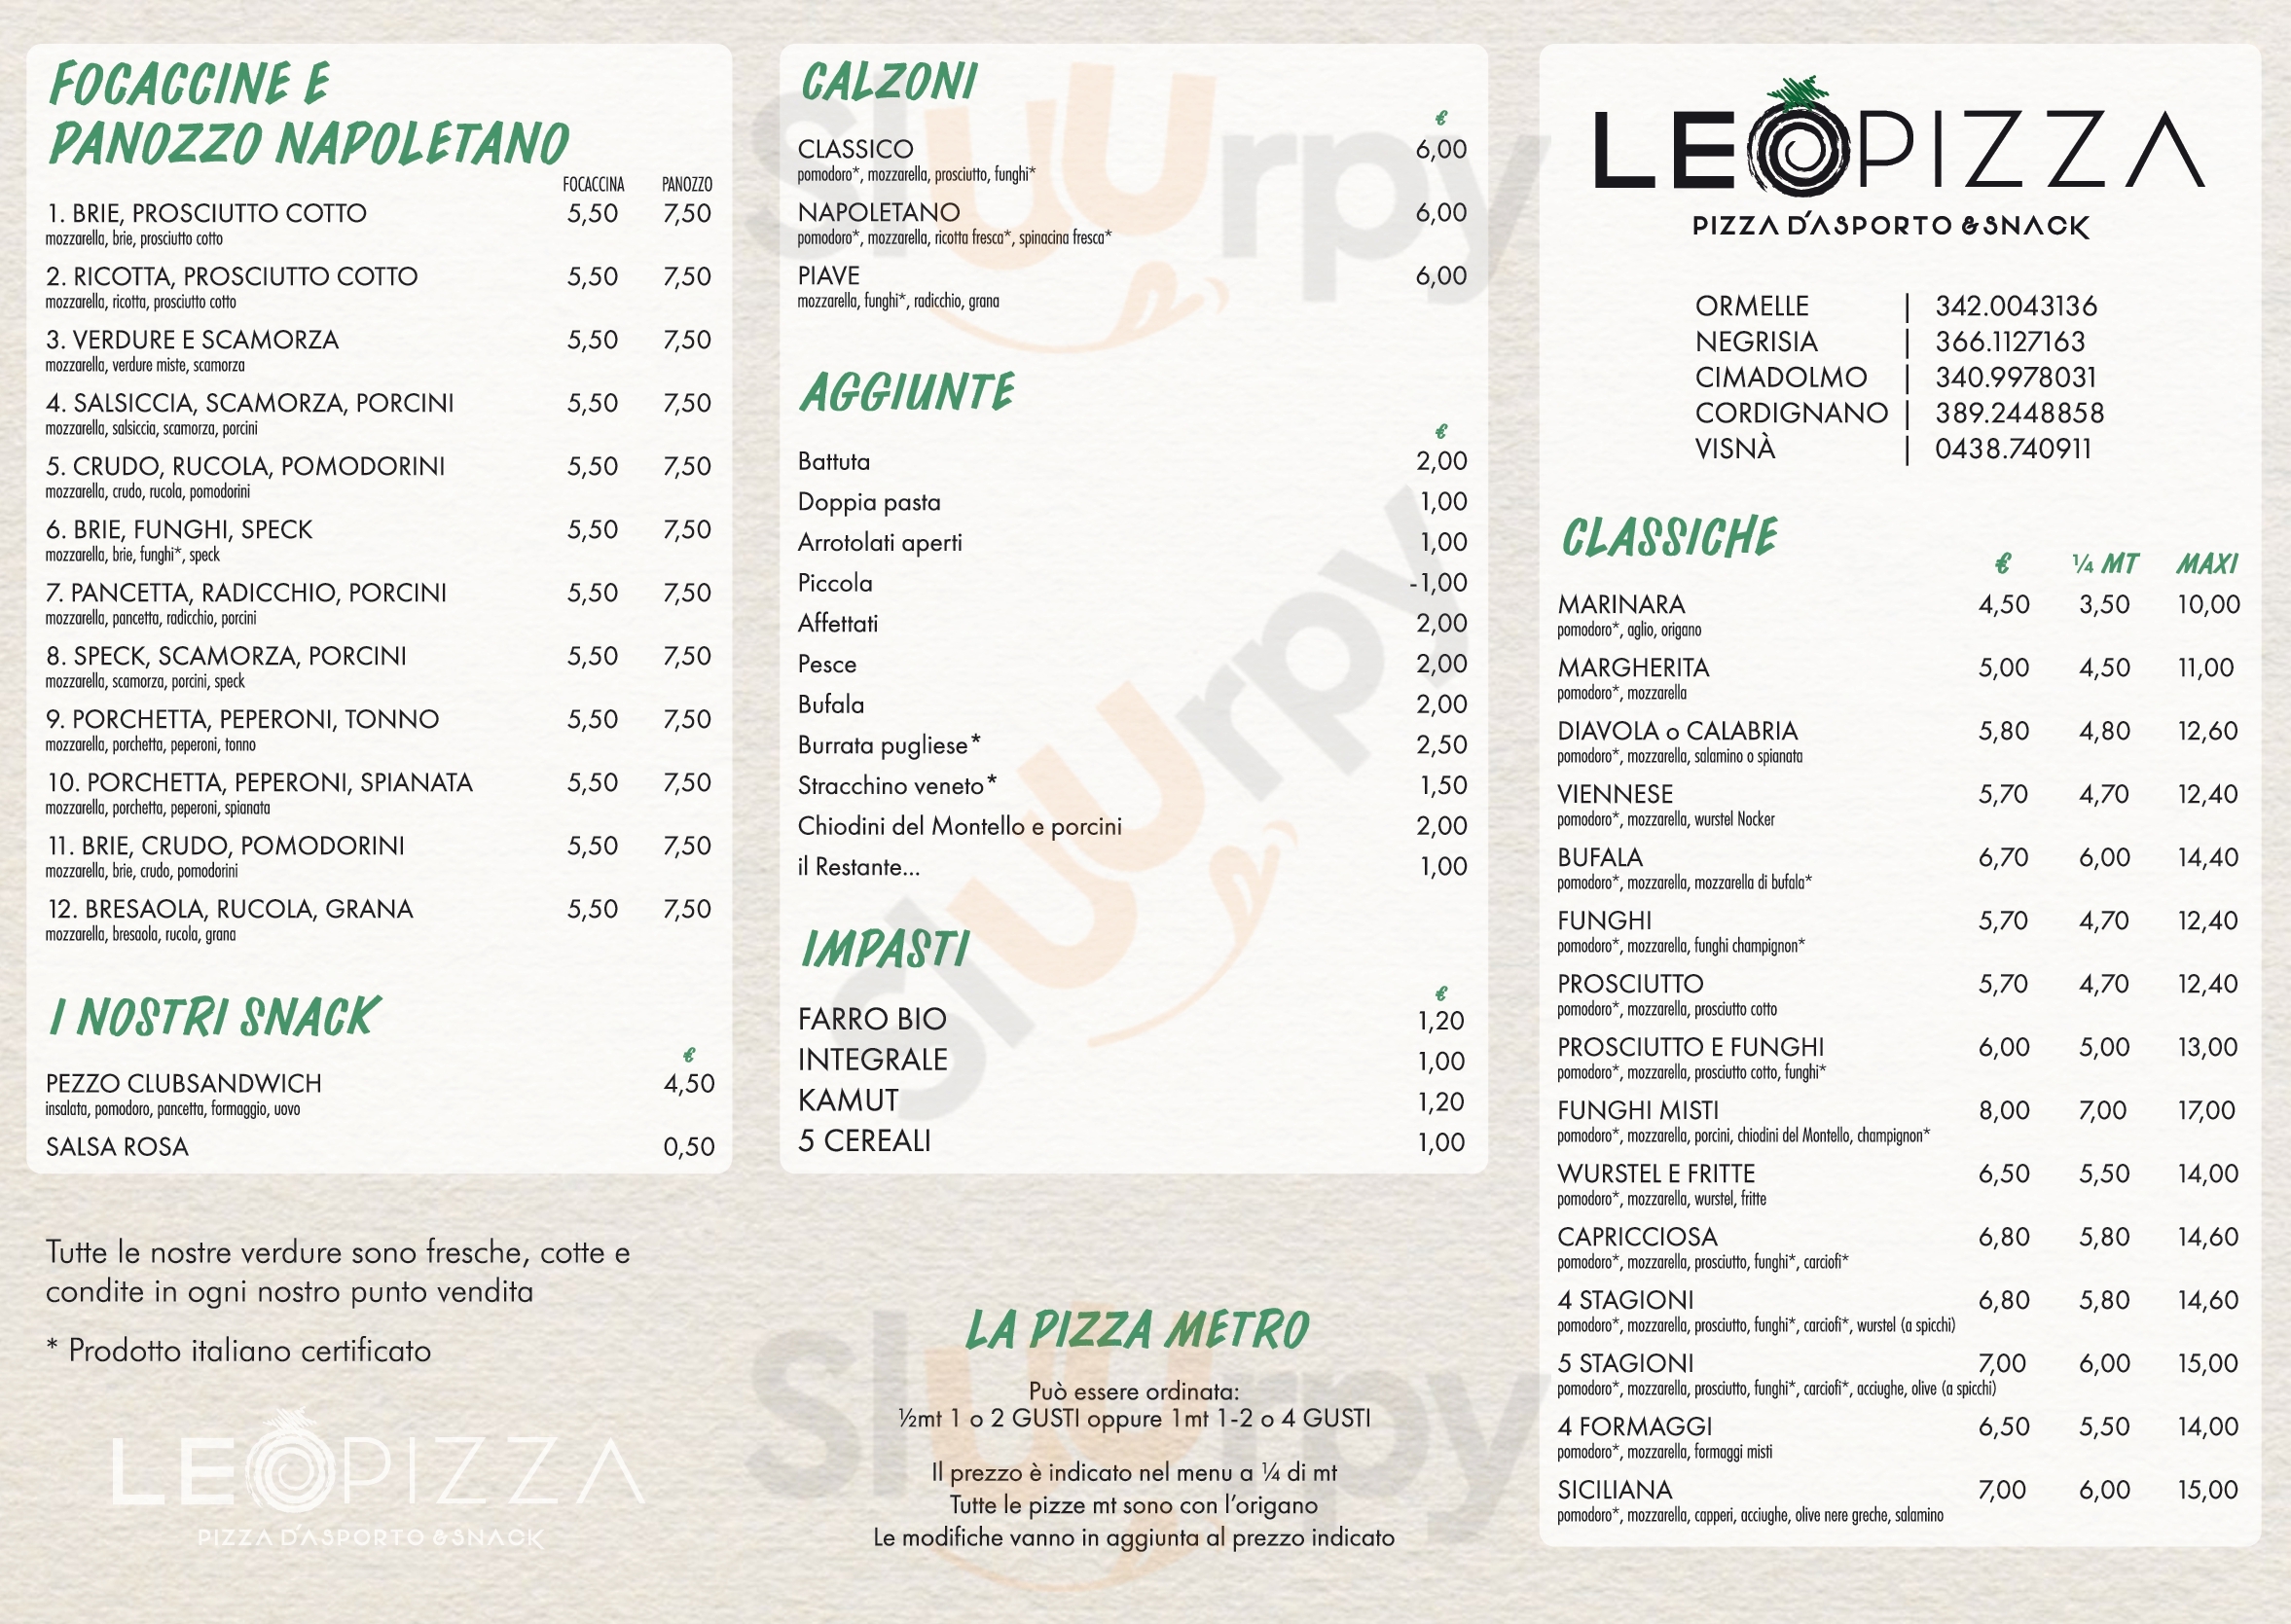 Leo Pizza Cimadolmo menù 1 pagina